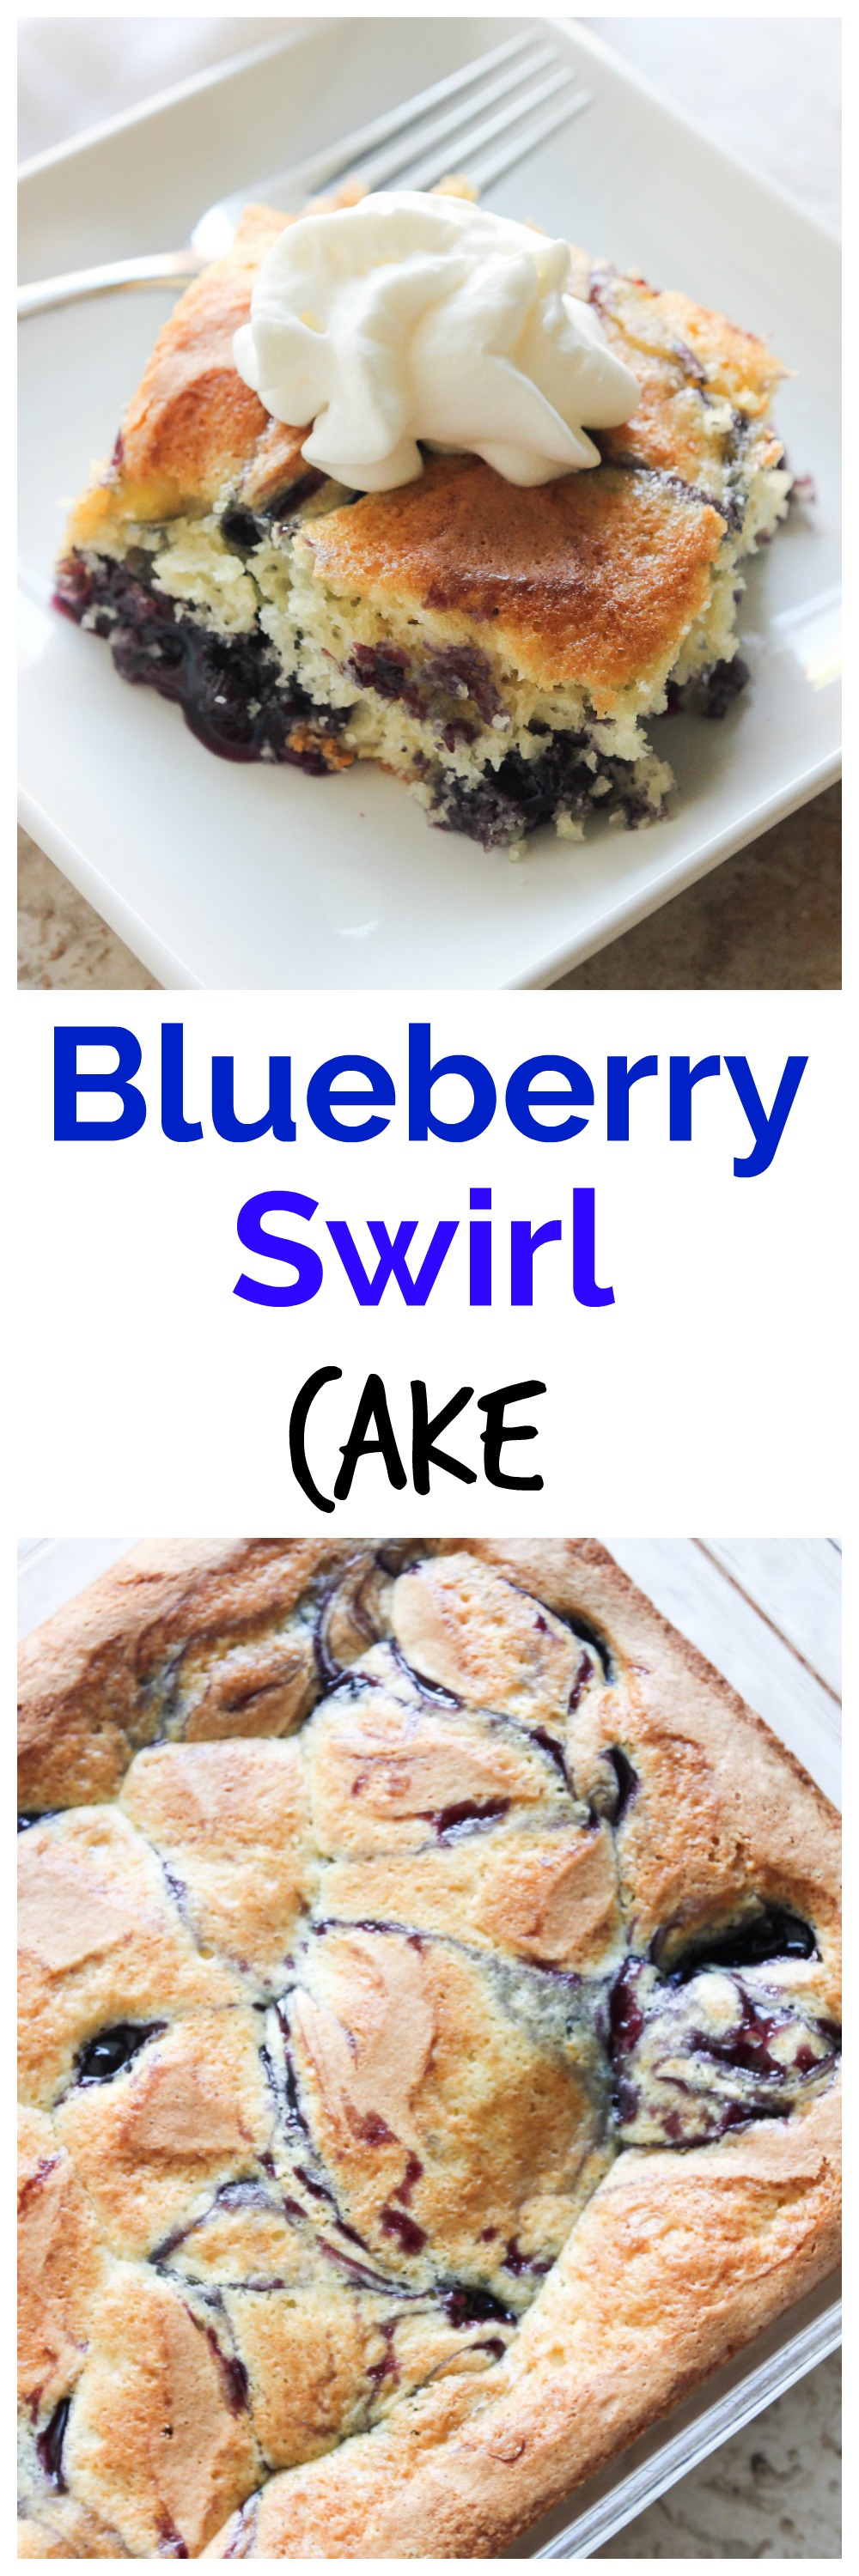 Blueberry Swirl Cake